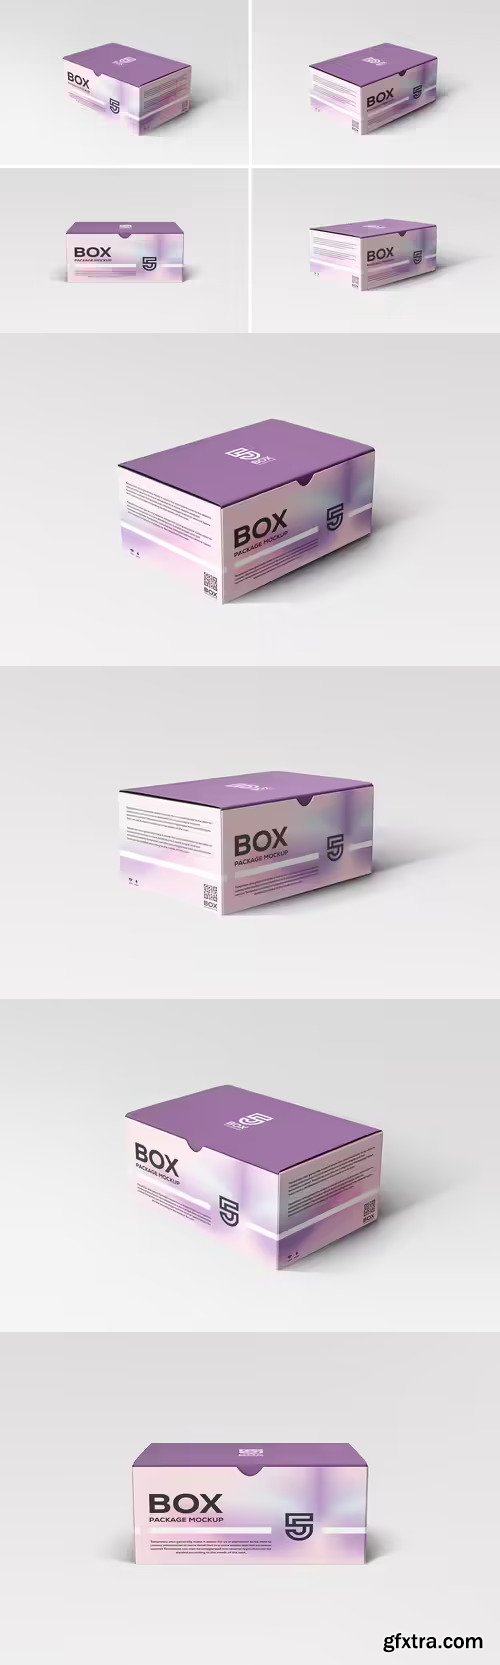 Box Package Mockups